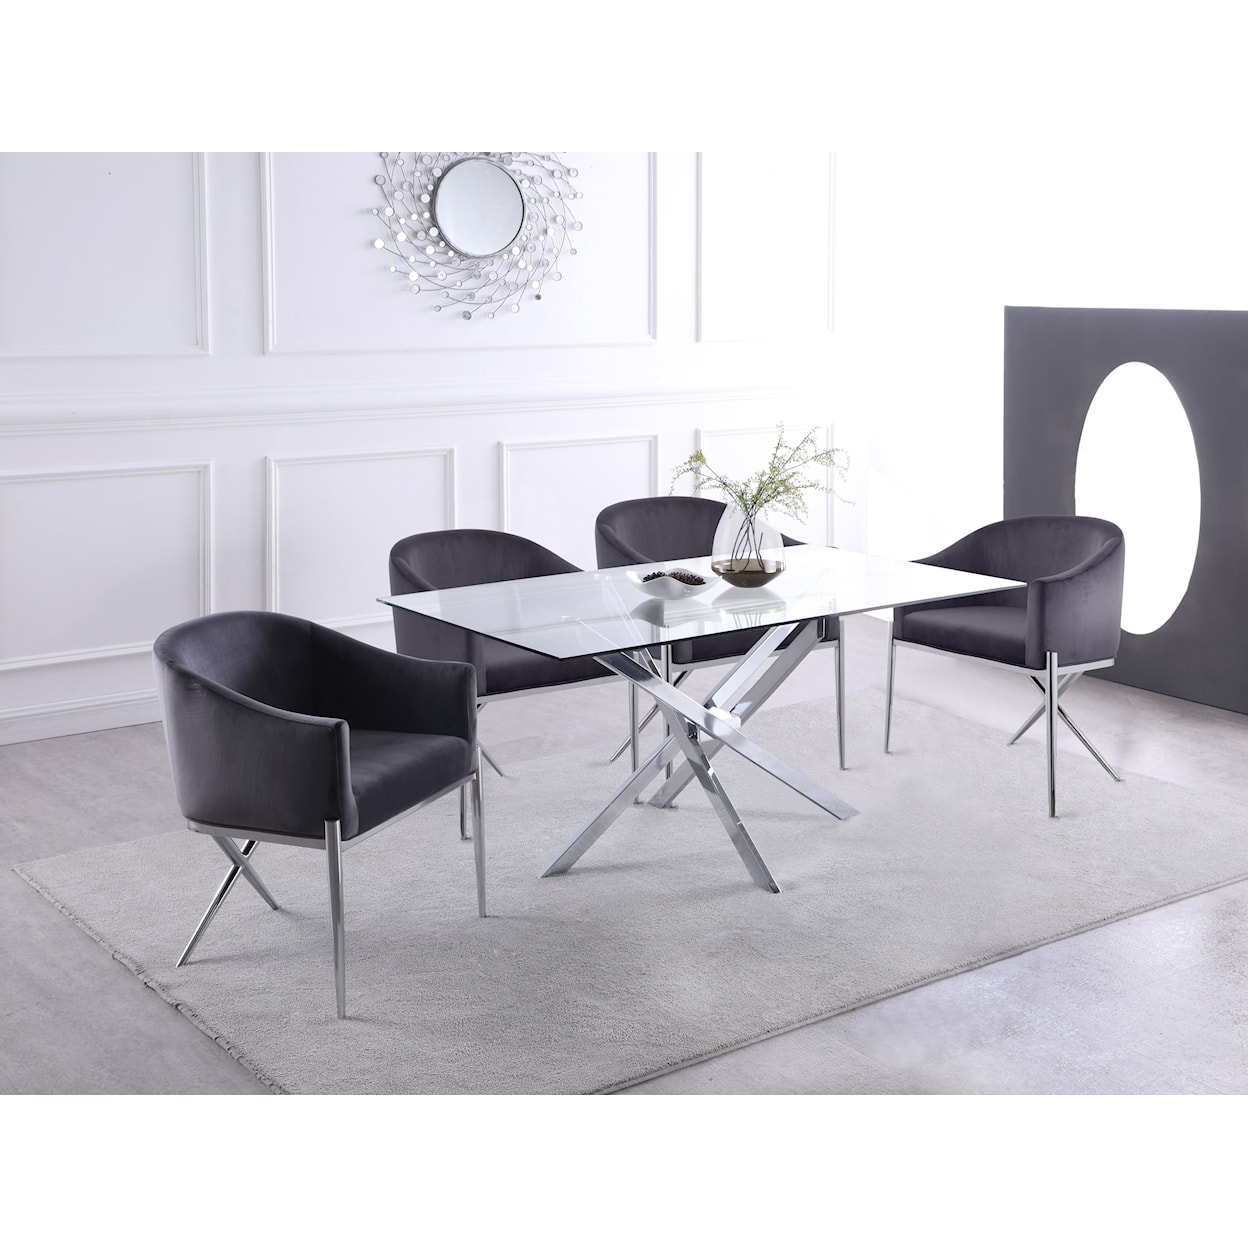 Meridian Furniture Xander Dining Table